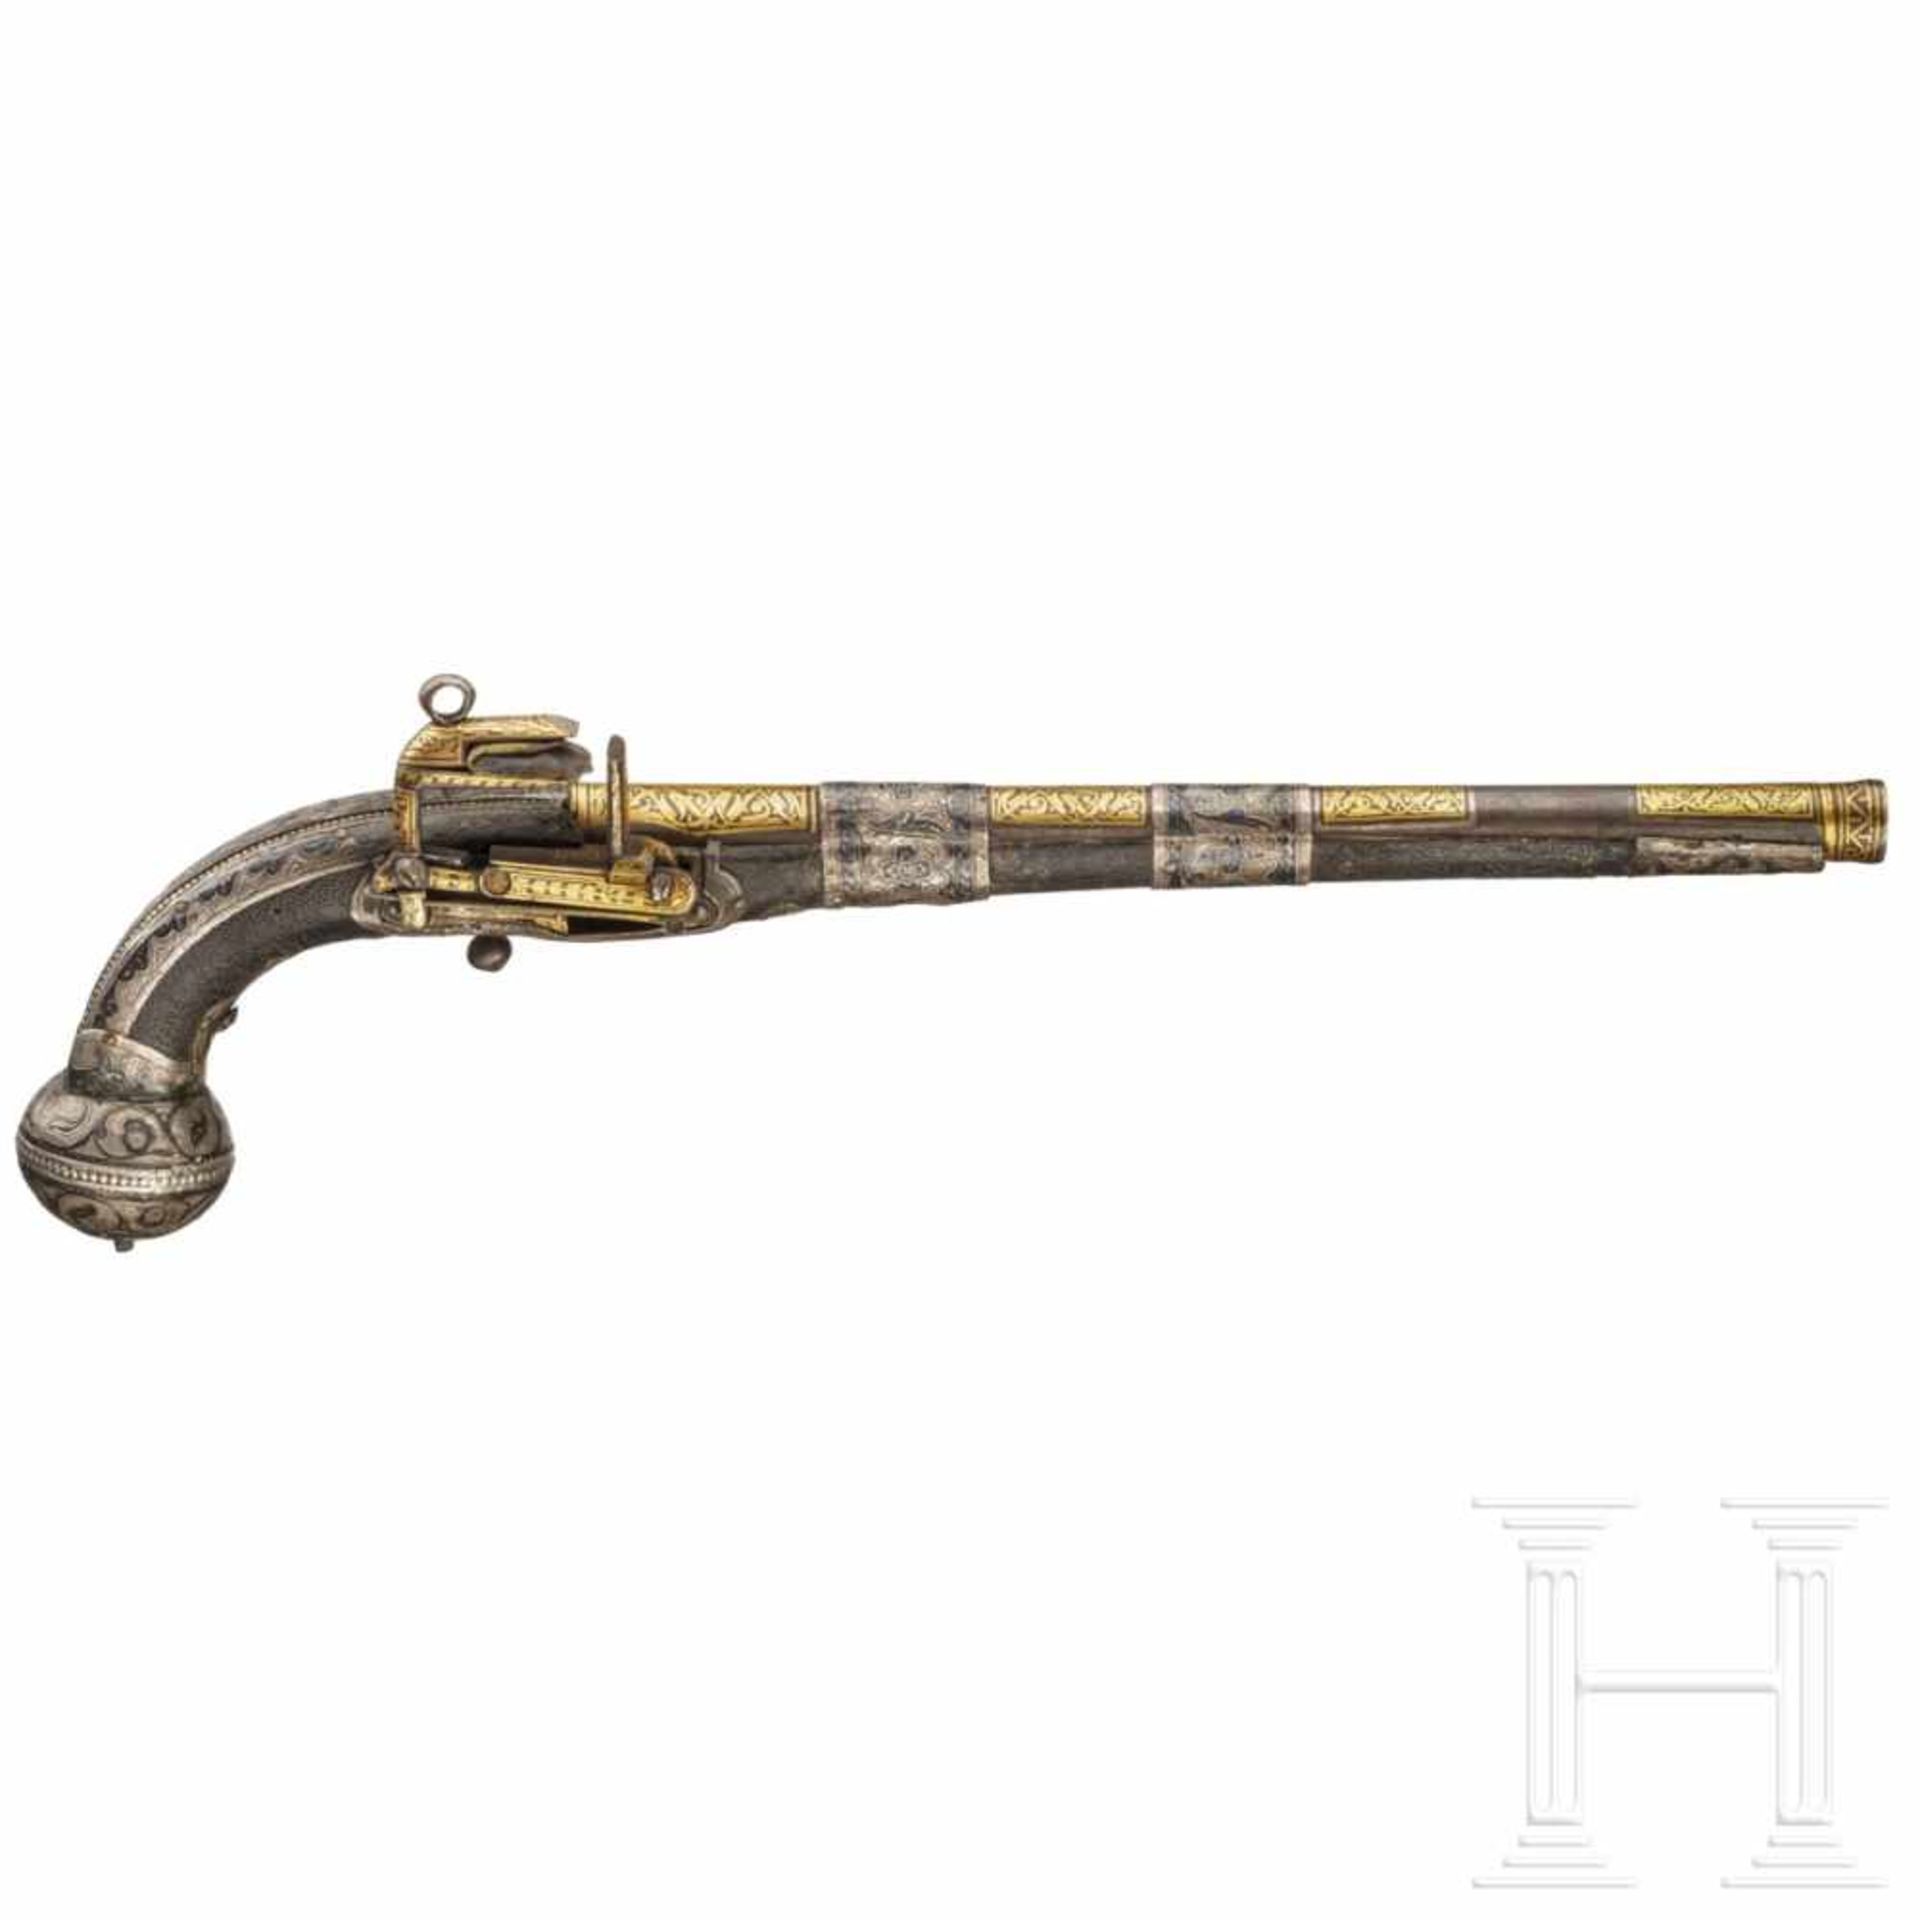 A gold-inlaid miquelet-lock pistol, Russia/Caucasus, mid-19th century.Smooth bore barrel in 12 mm